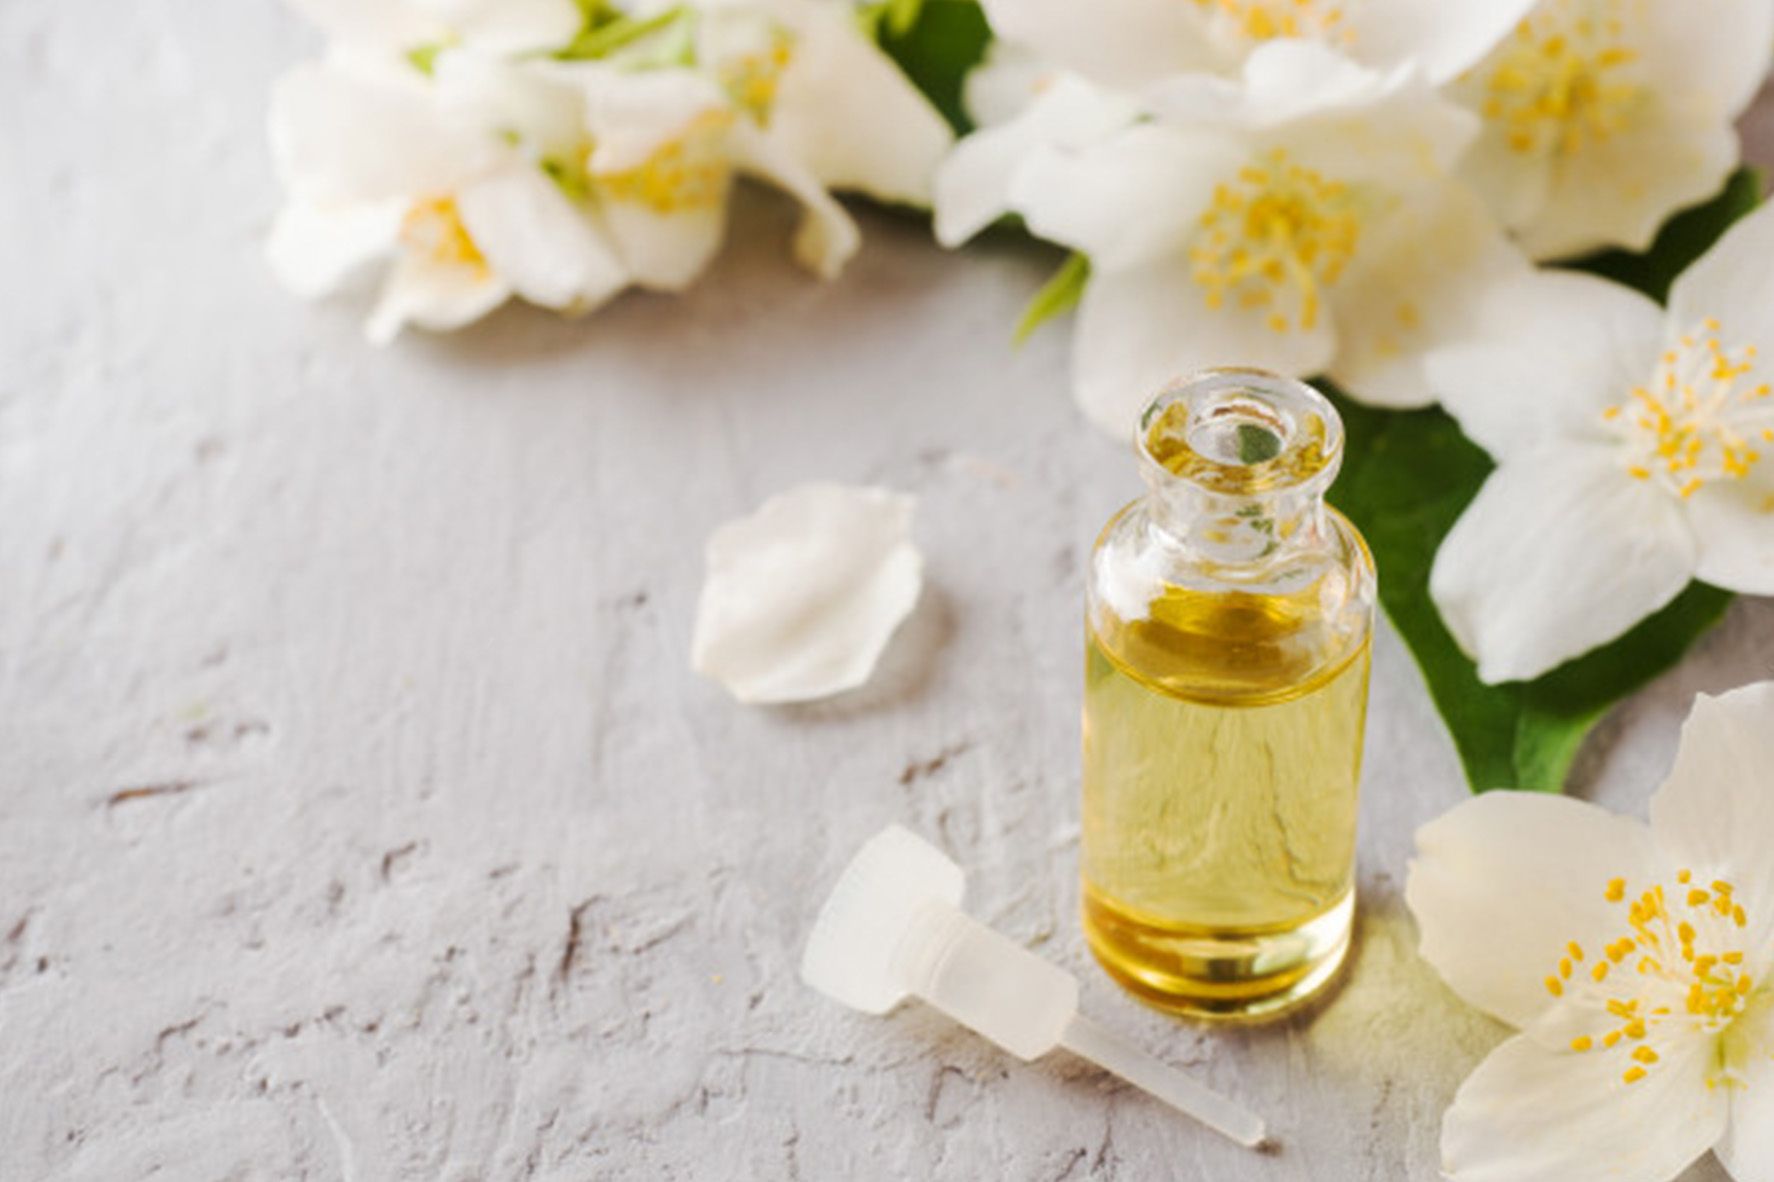 Benefits of Jasmine Oil